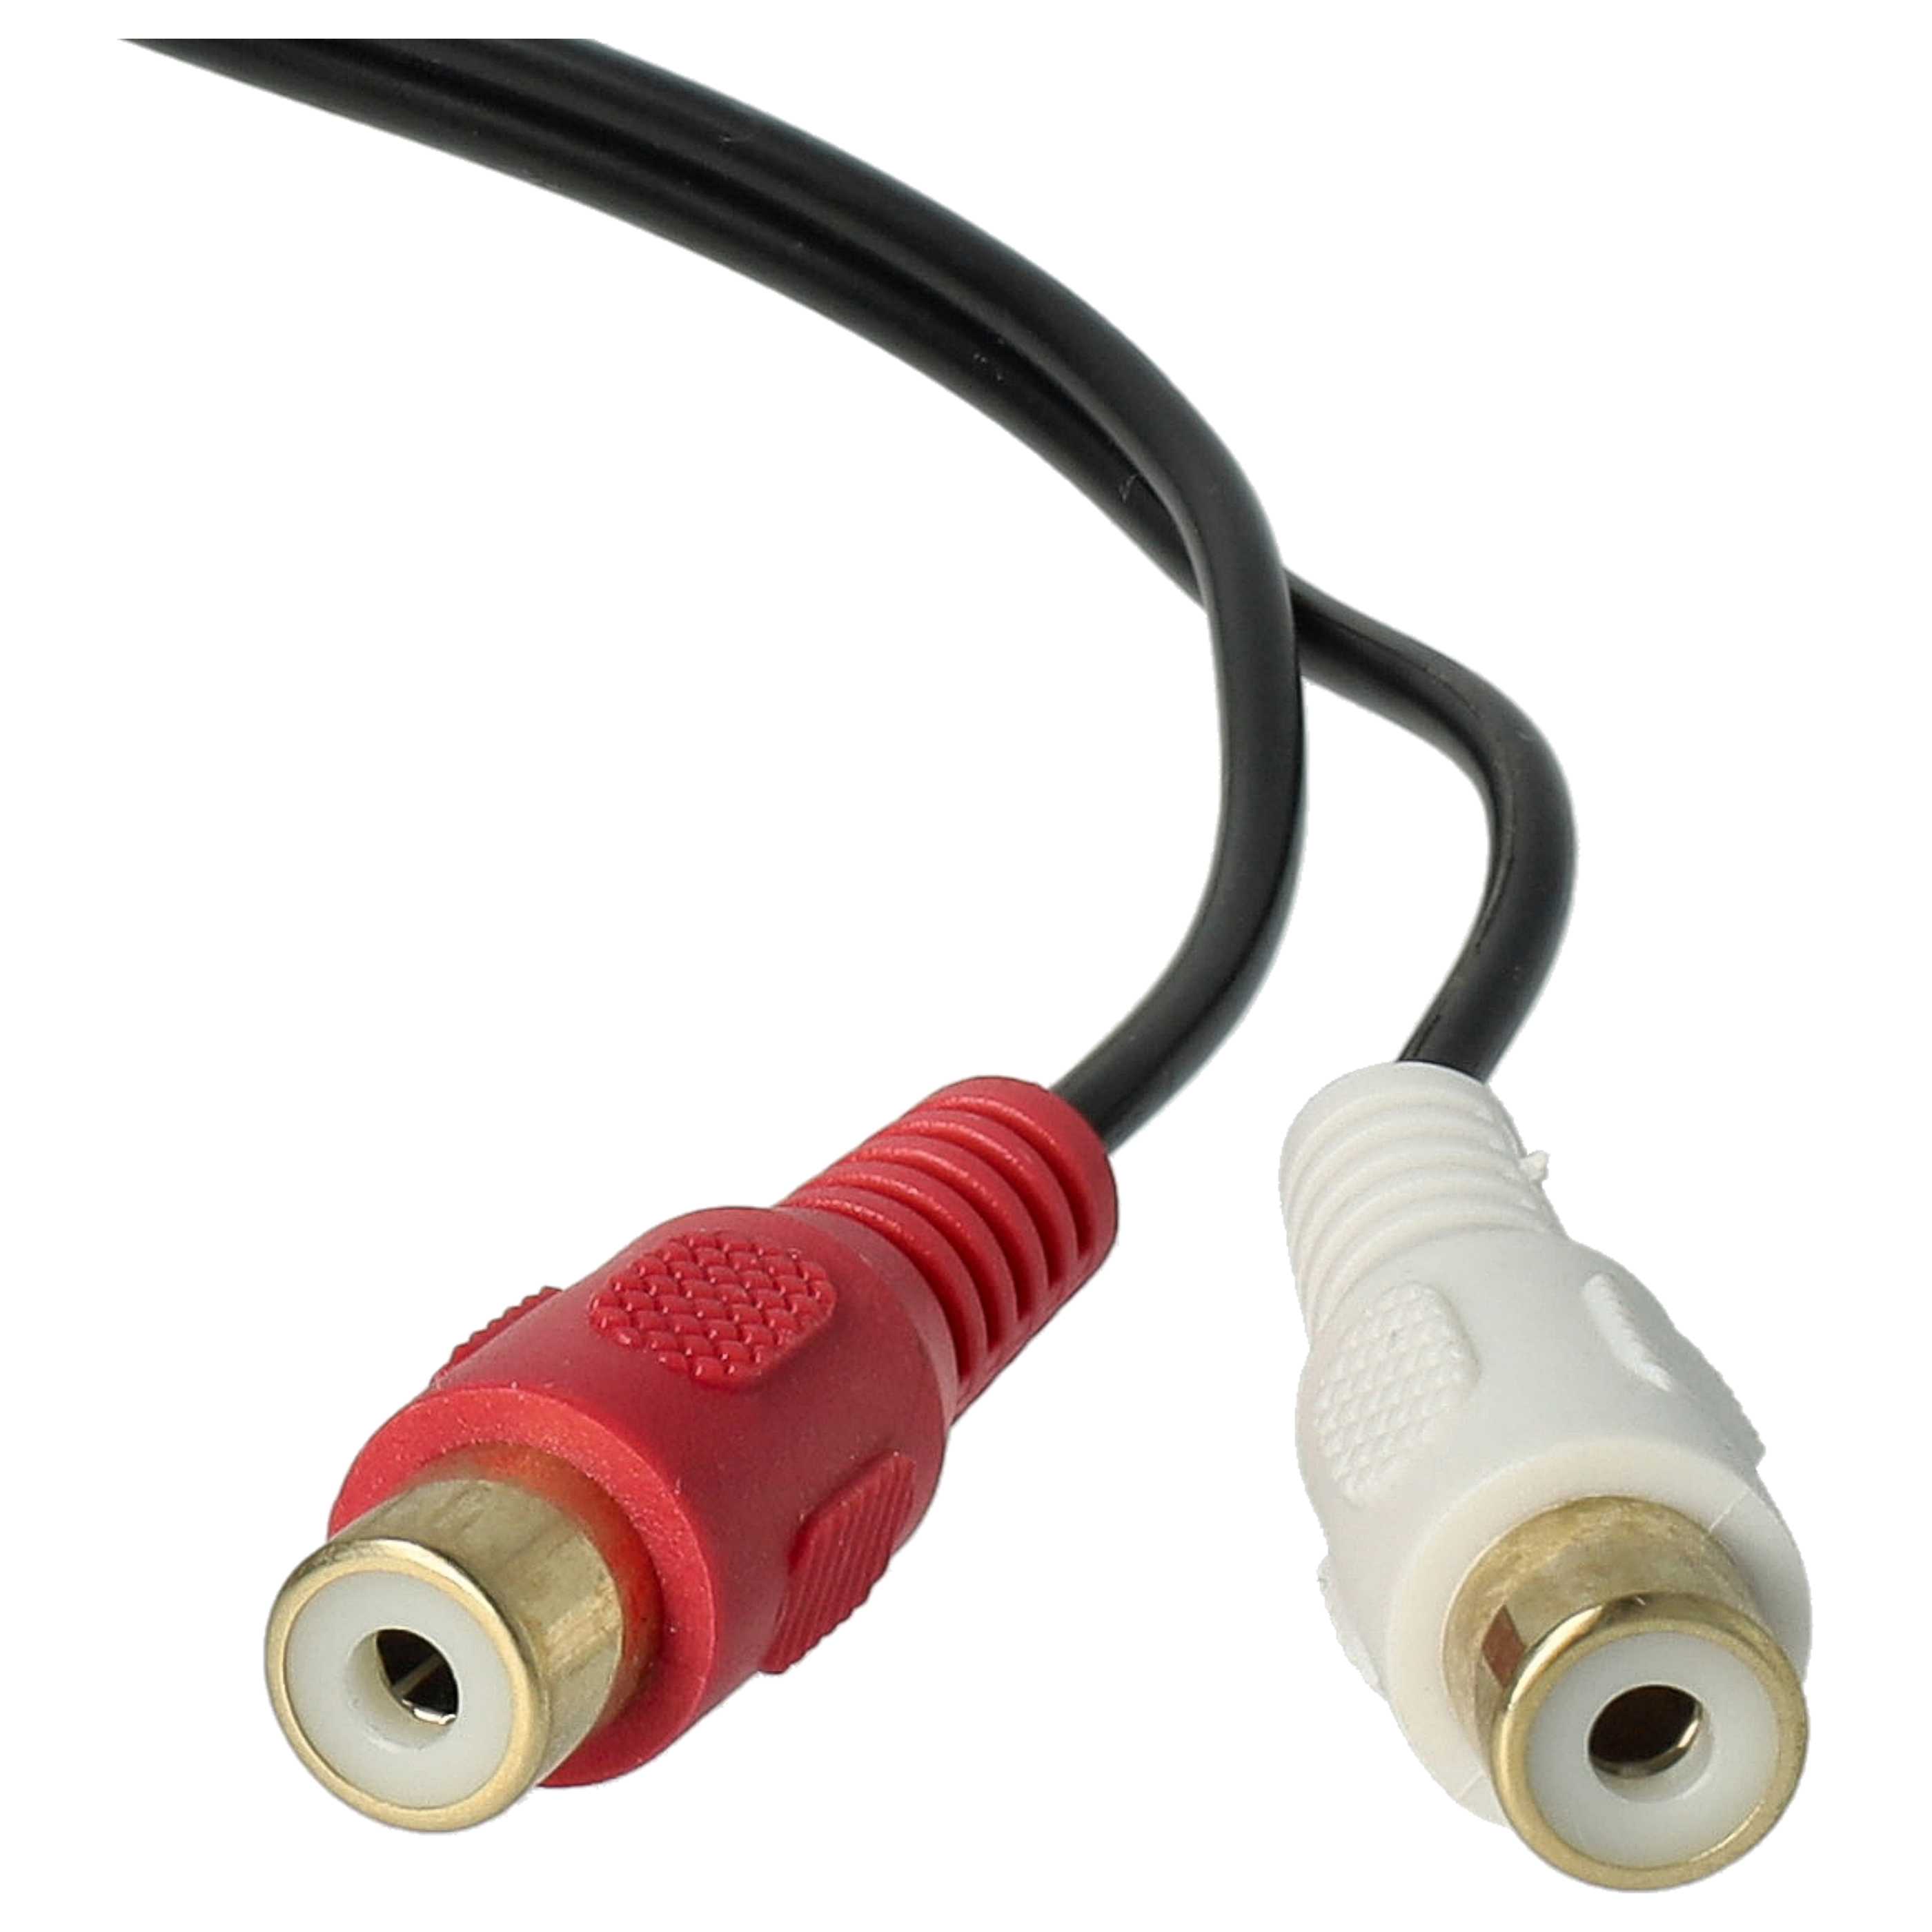 Audio Kabel als Ersatz für JVC KS-U57 für Autoradio - 60 cm lang